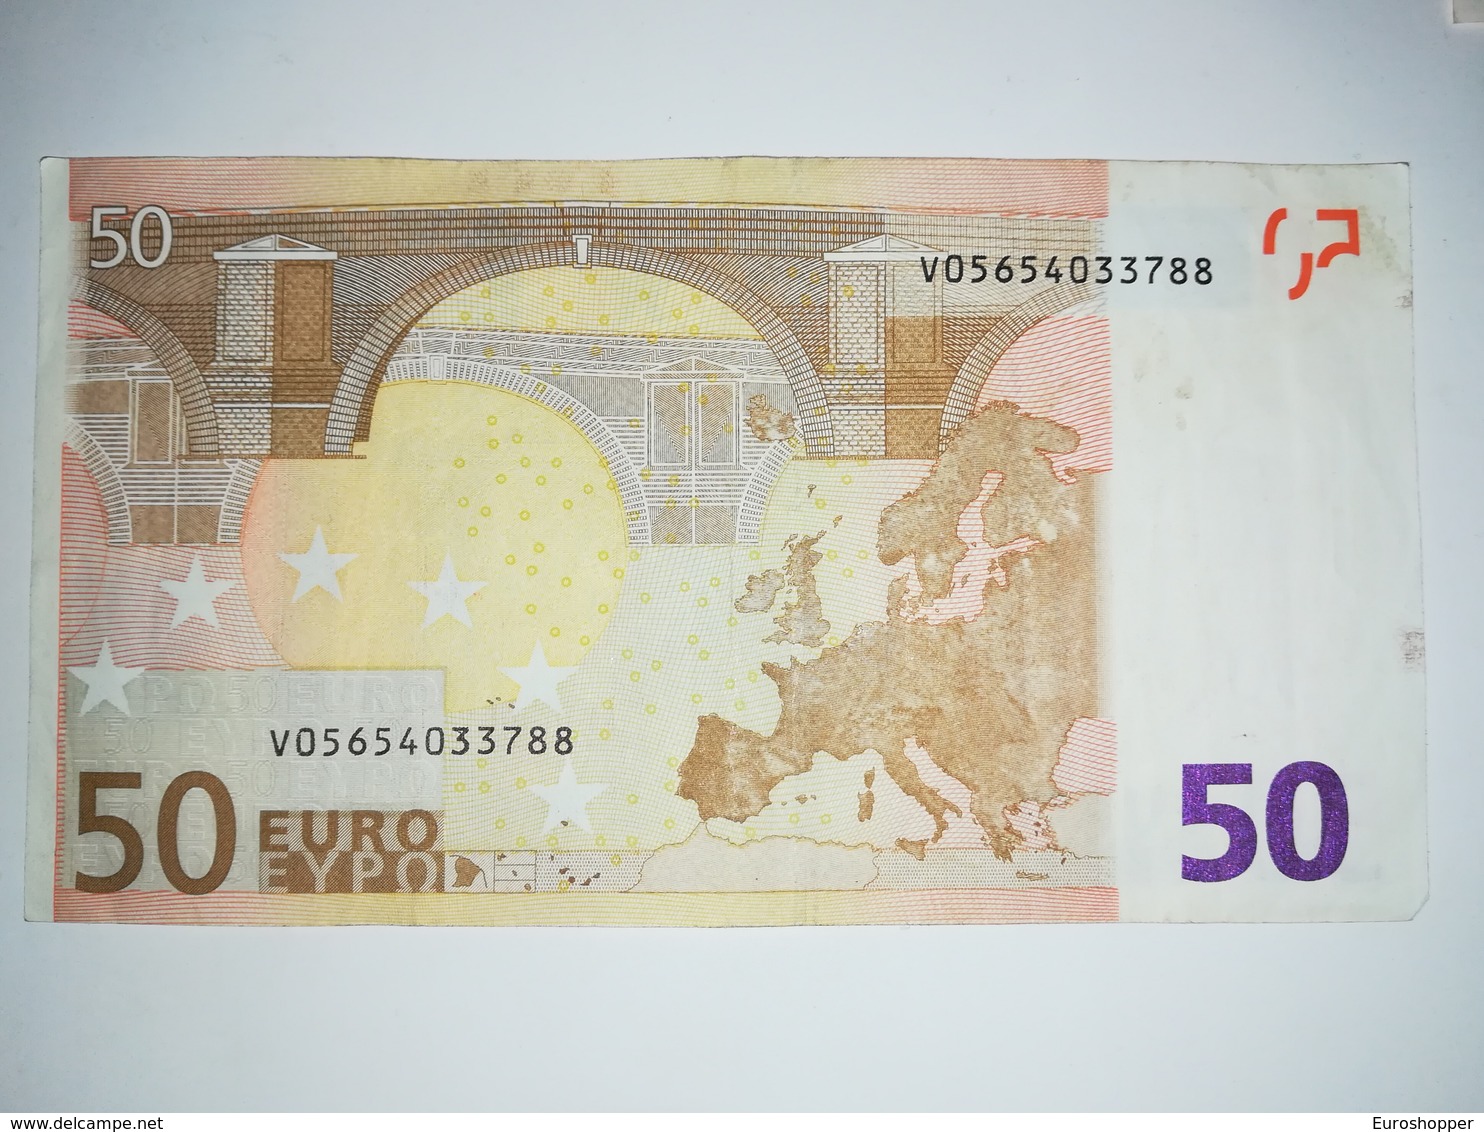 EURO - SPAIN 50 EURO (V) M006 Sign DUISENBERG - 50 Euro